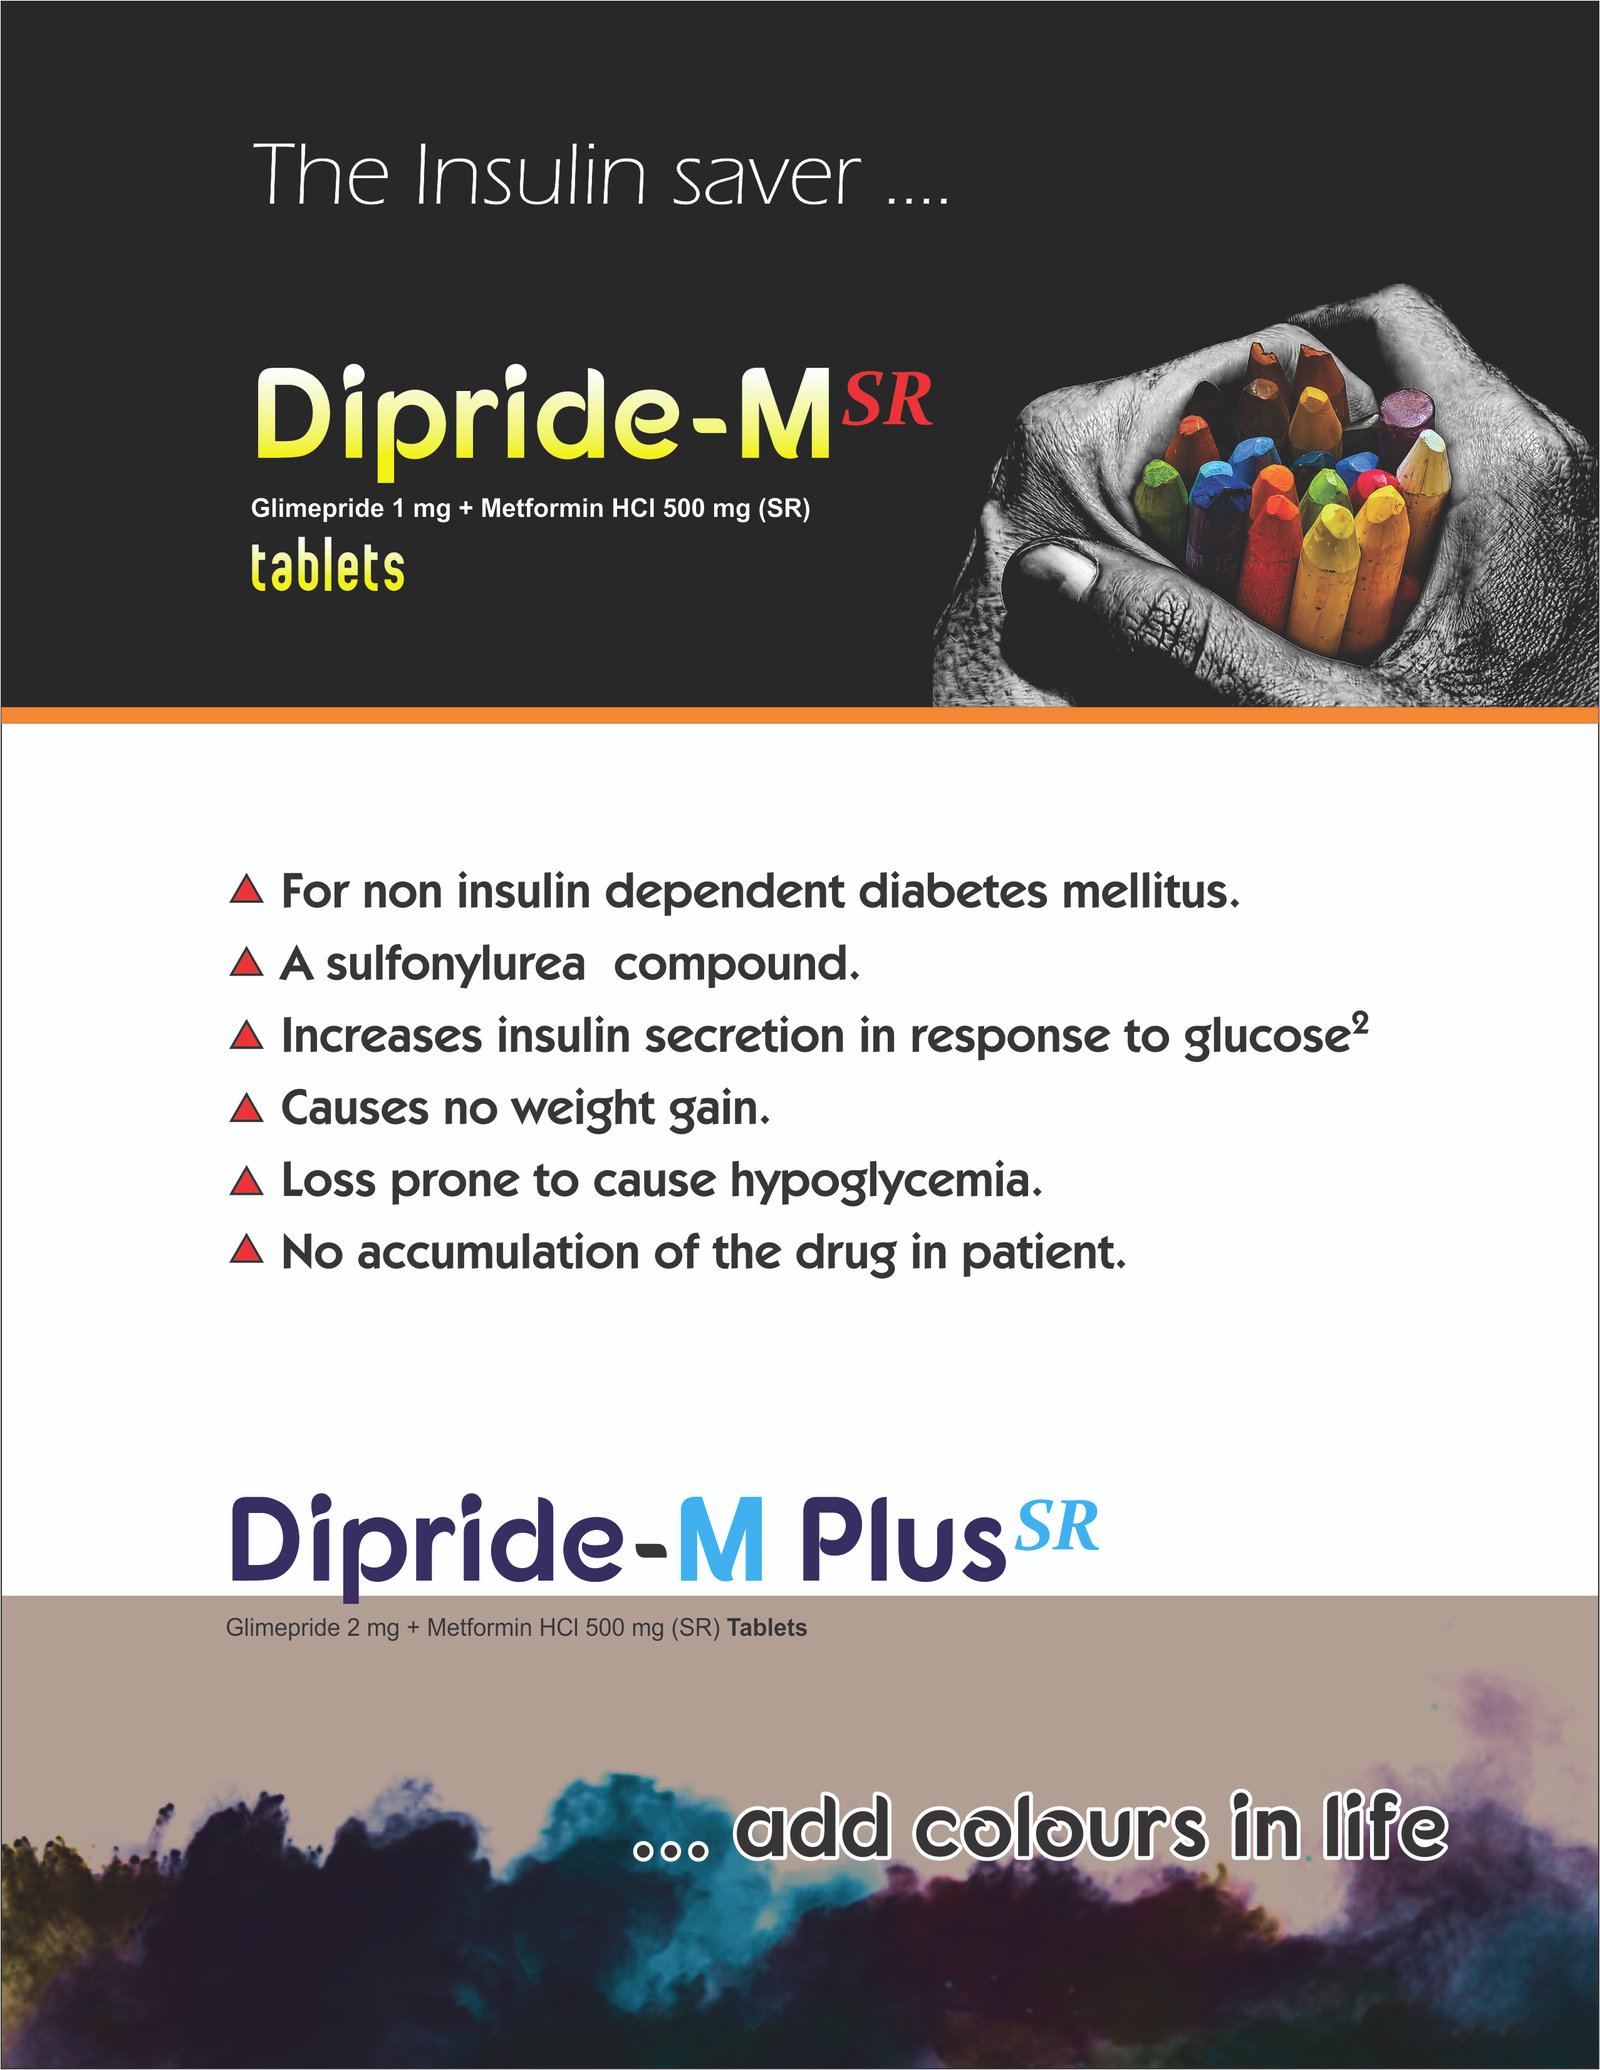 dipride, dipride-m , daksh pharmaceuticals, daksh pharmaceuticals panchkula, anti-diabetic, pcd franchise